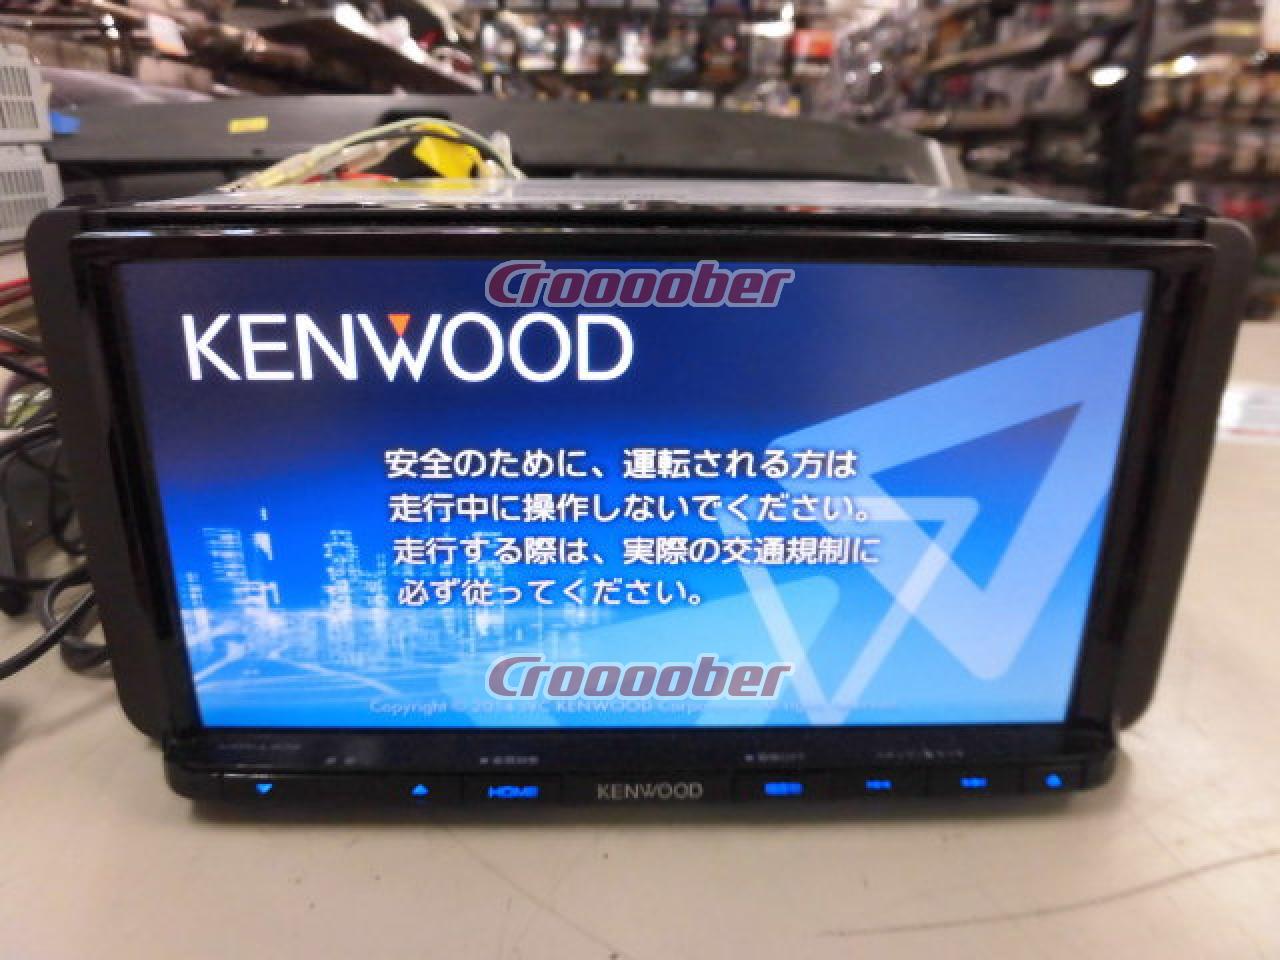 KENWOOD MDV-L402 | Memory Navigation(digital) | Croooober